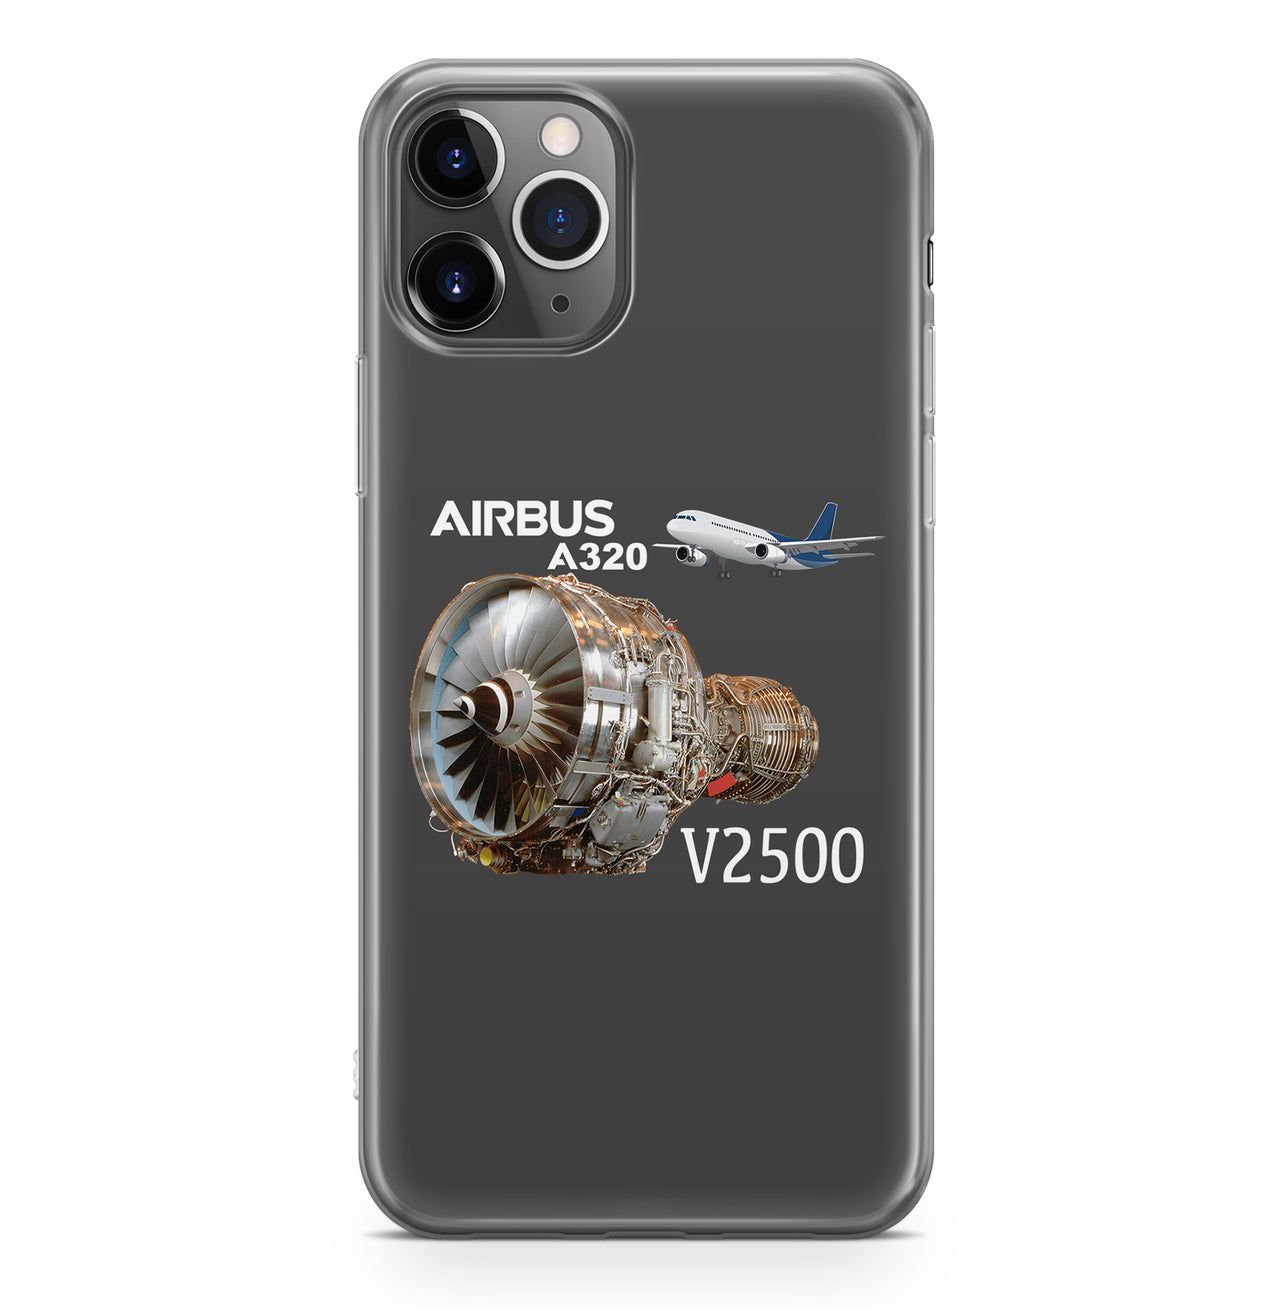 Airbus A320 & V2500 Engine Designed iPhone Cases